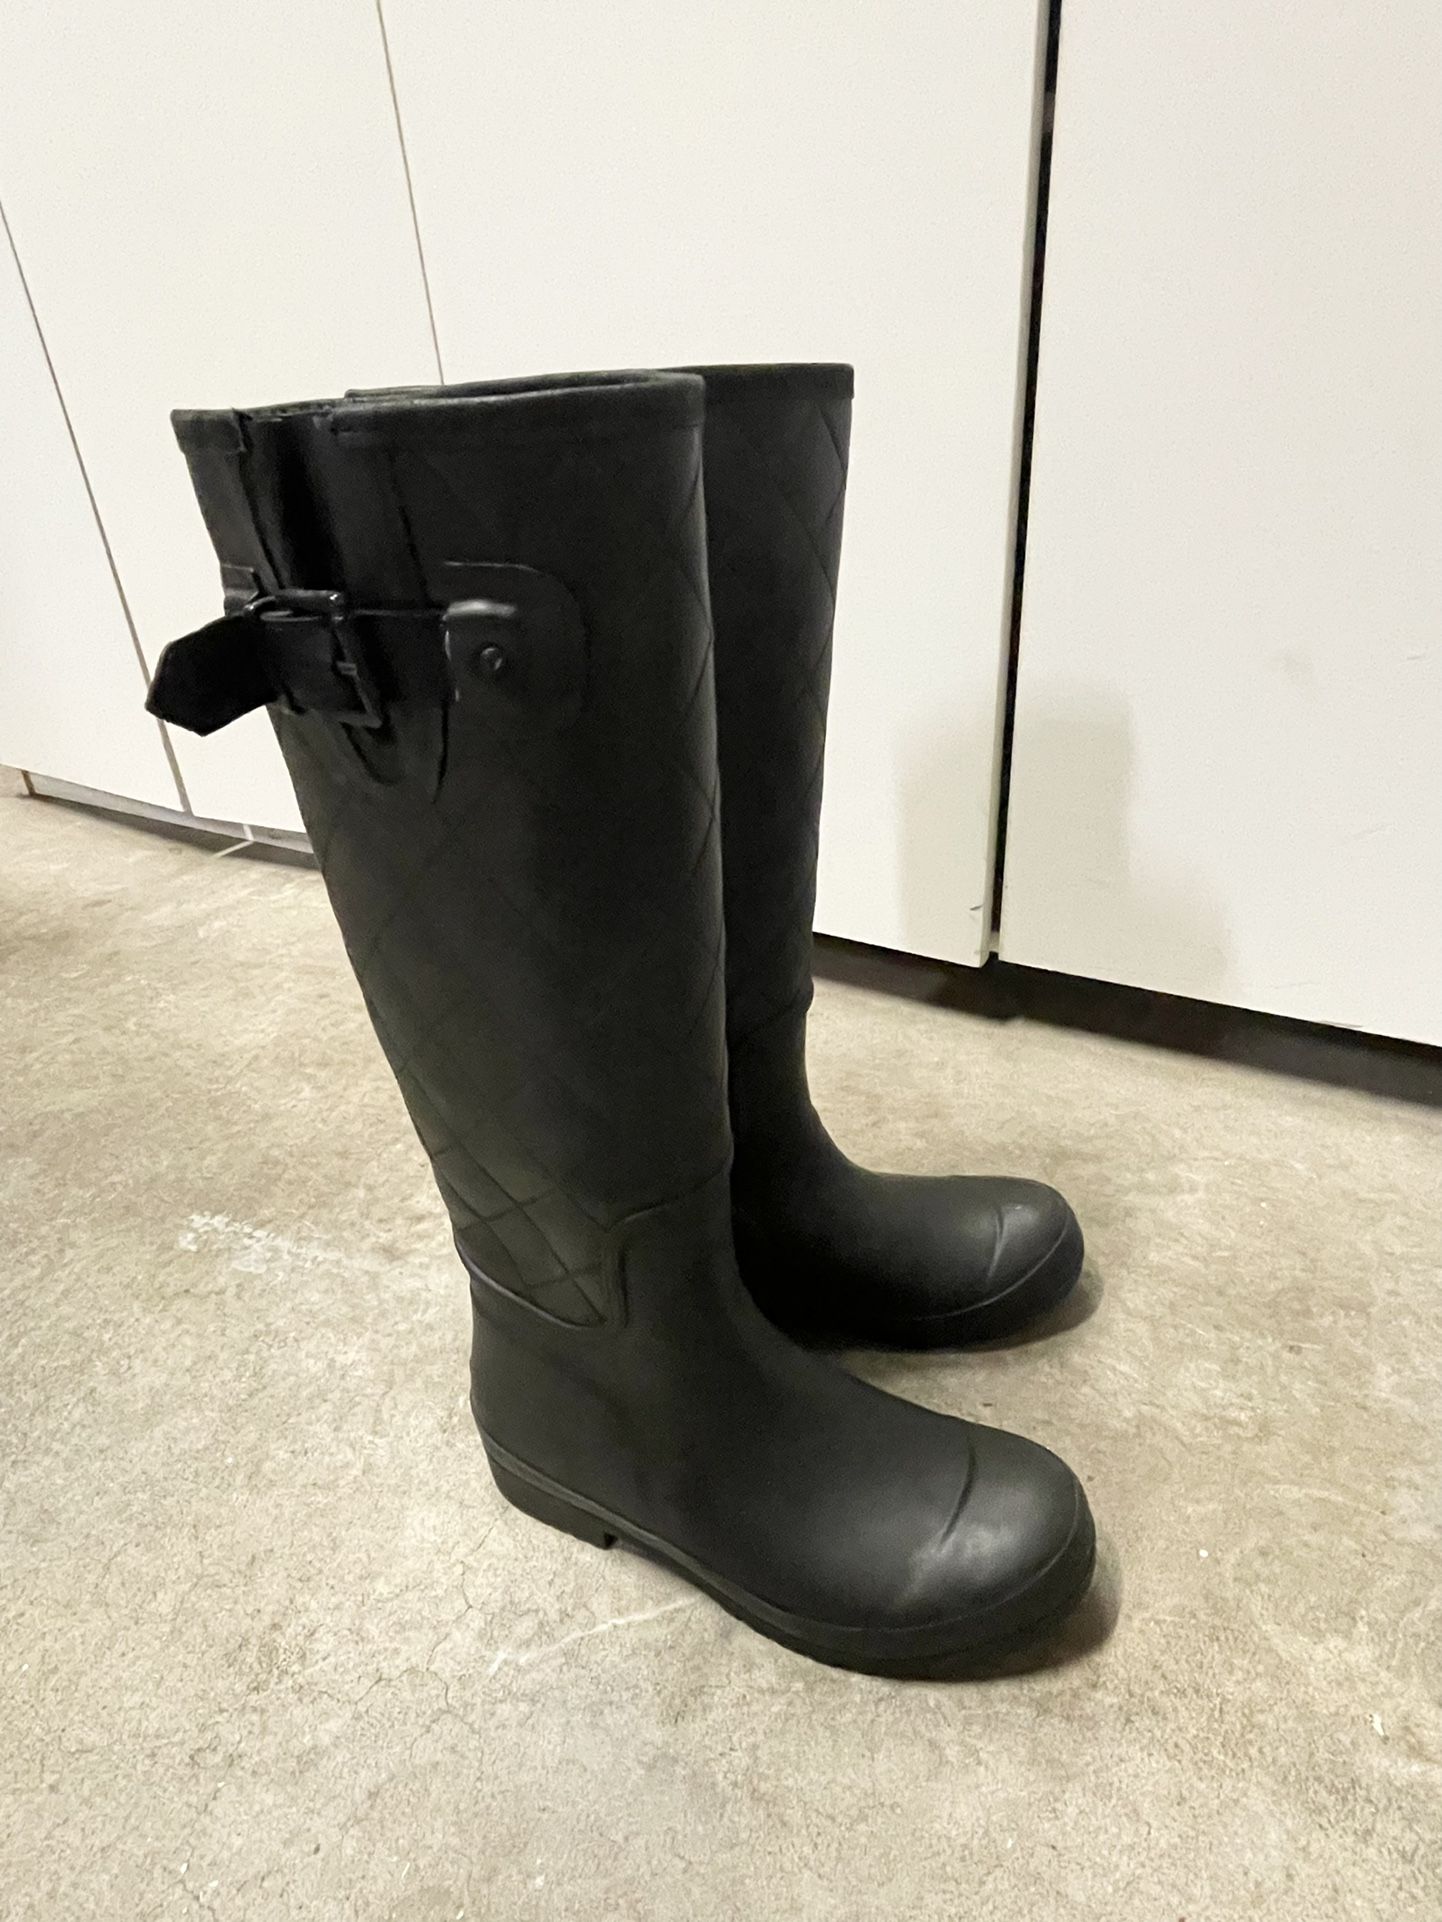 Sperry Womens Tall Rain Boots Size 7